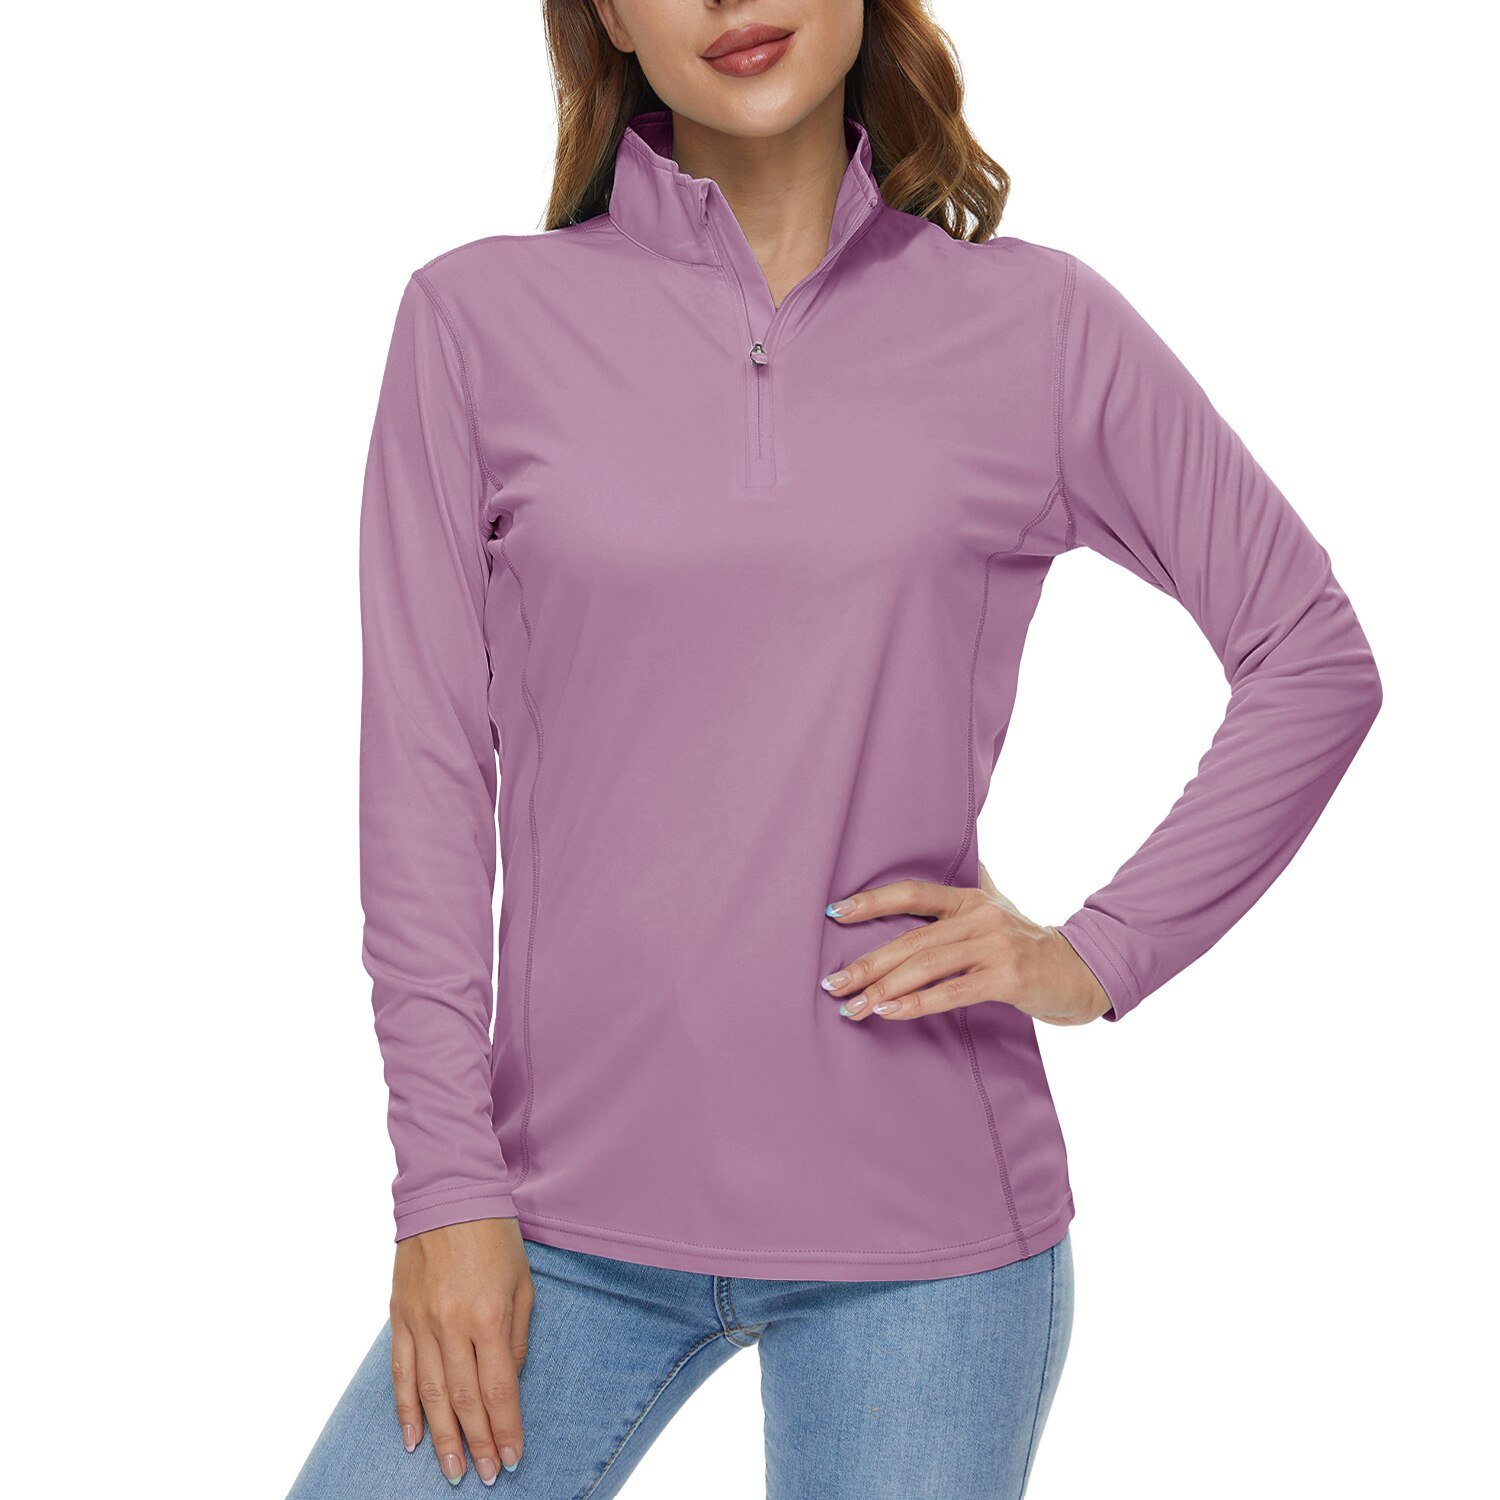 Women Anti UVSun Protection Shirts Outdoor Running T-Shirts Gray Purple